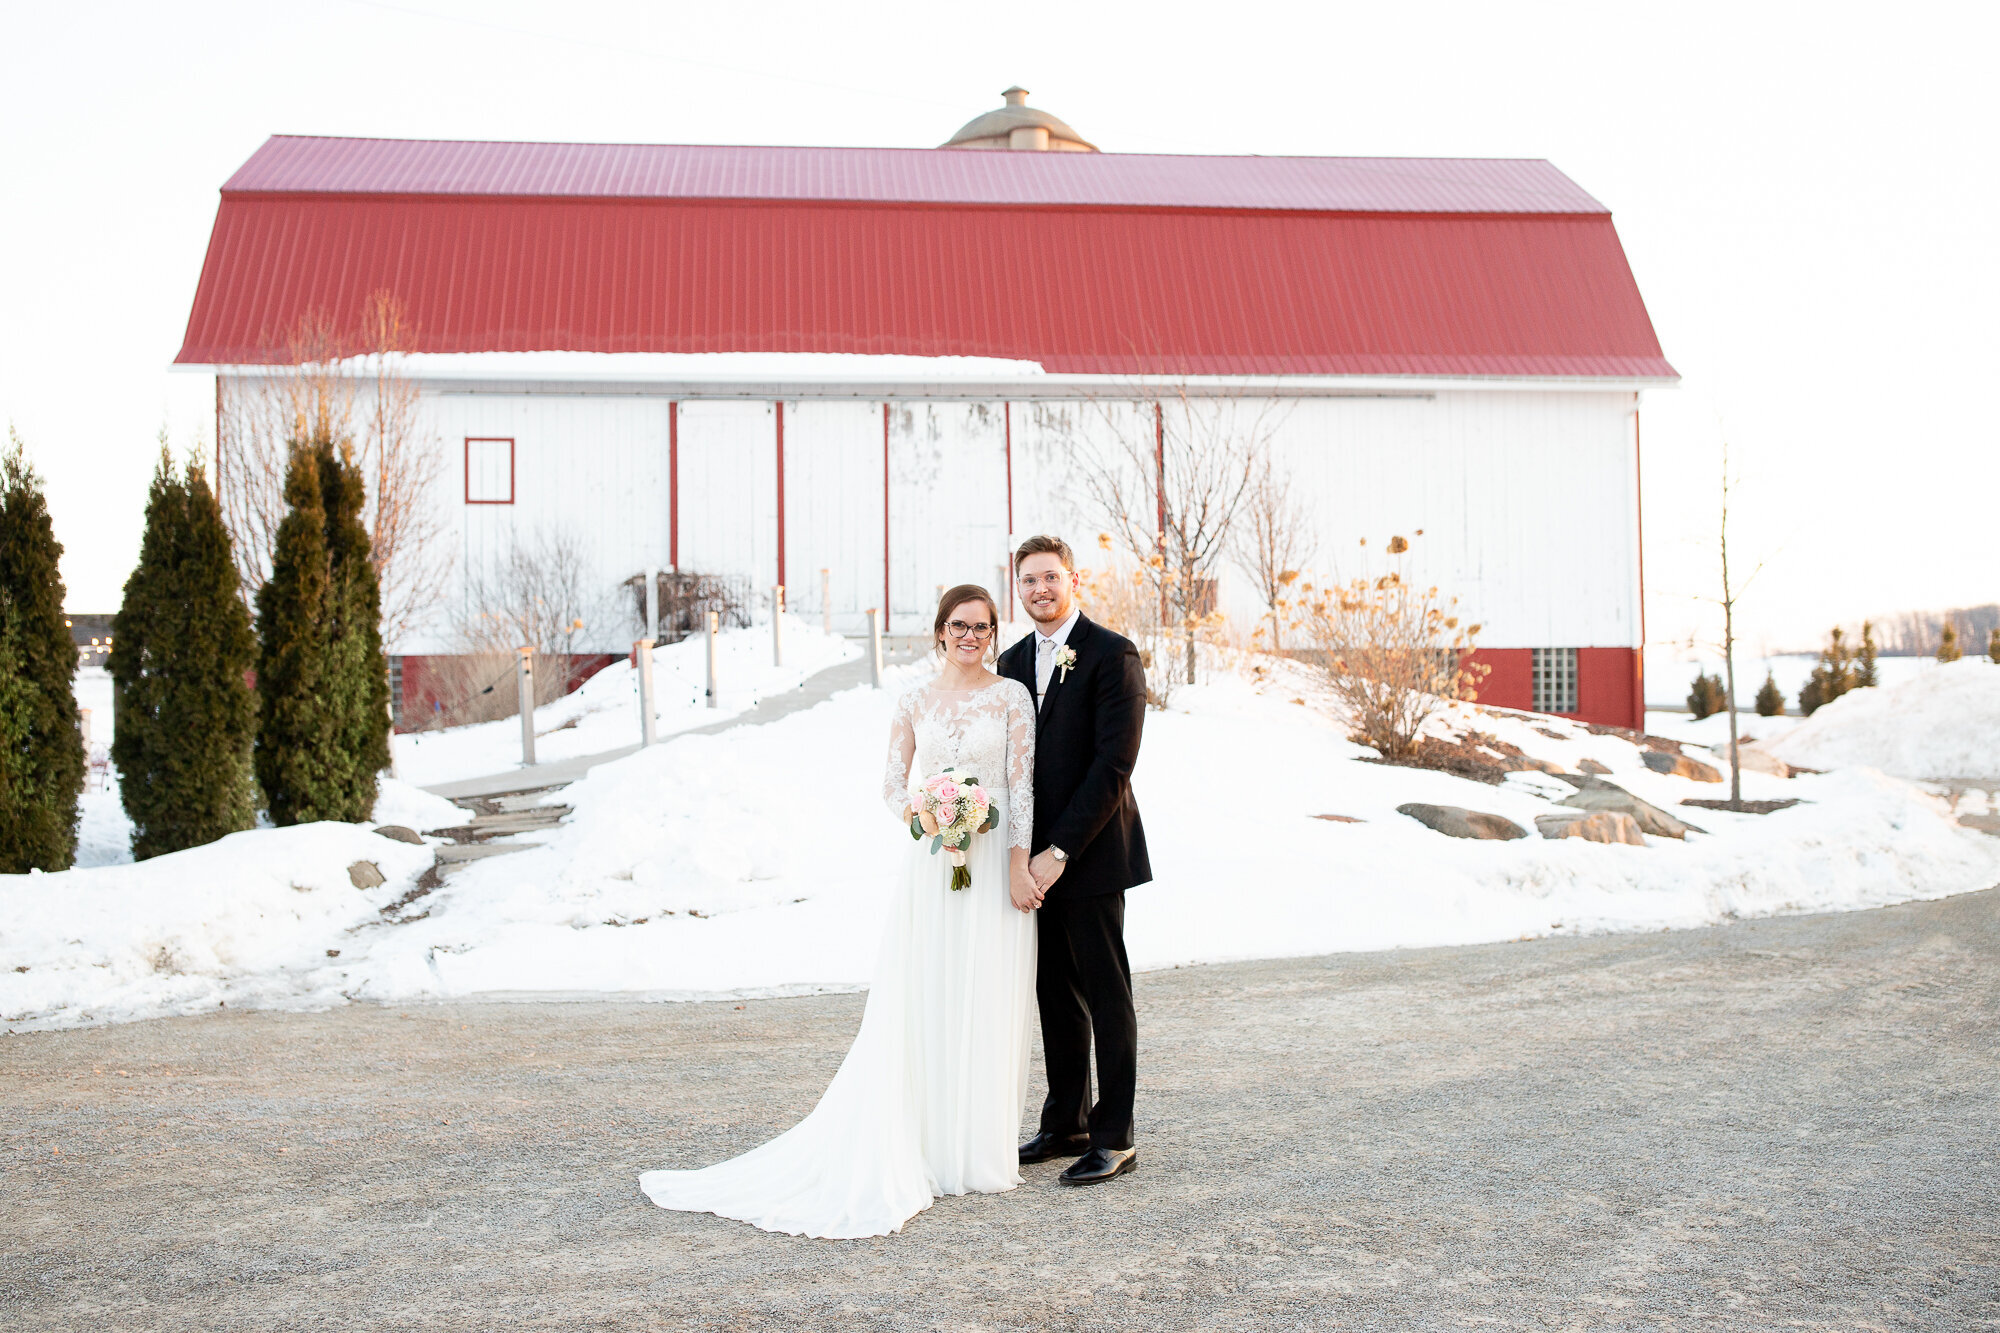 Rustic+Winter+Barn+Wedding+at+Brighton+Acres+in+Oshkosh+Wisconsin+-+Whit+Meza+Photography.jpeg